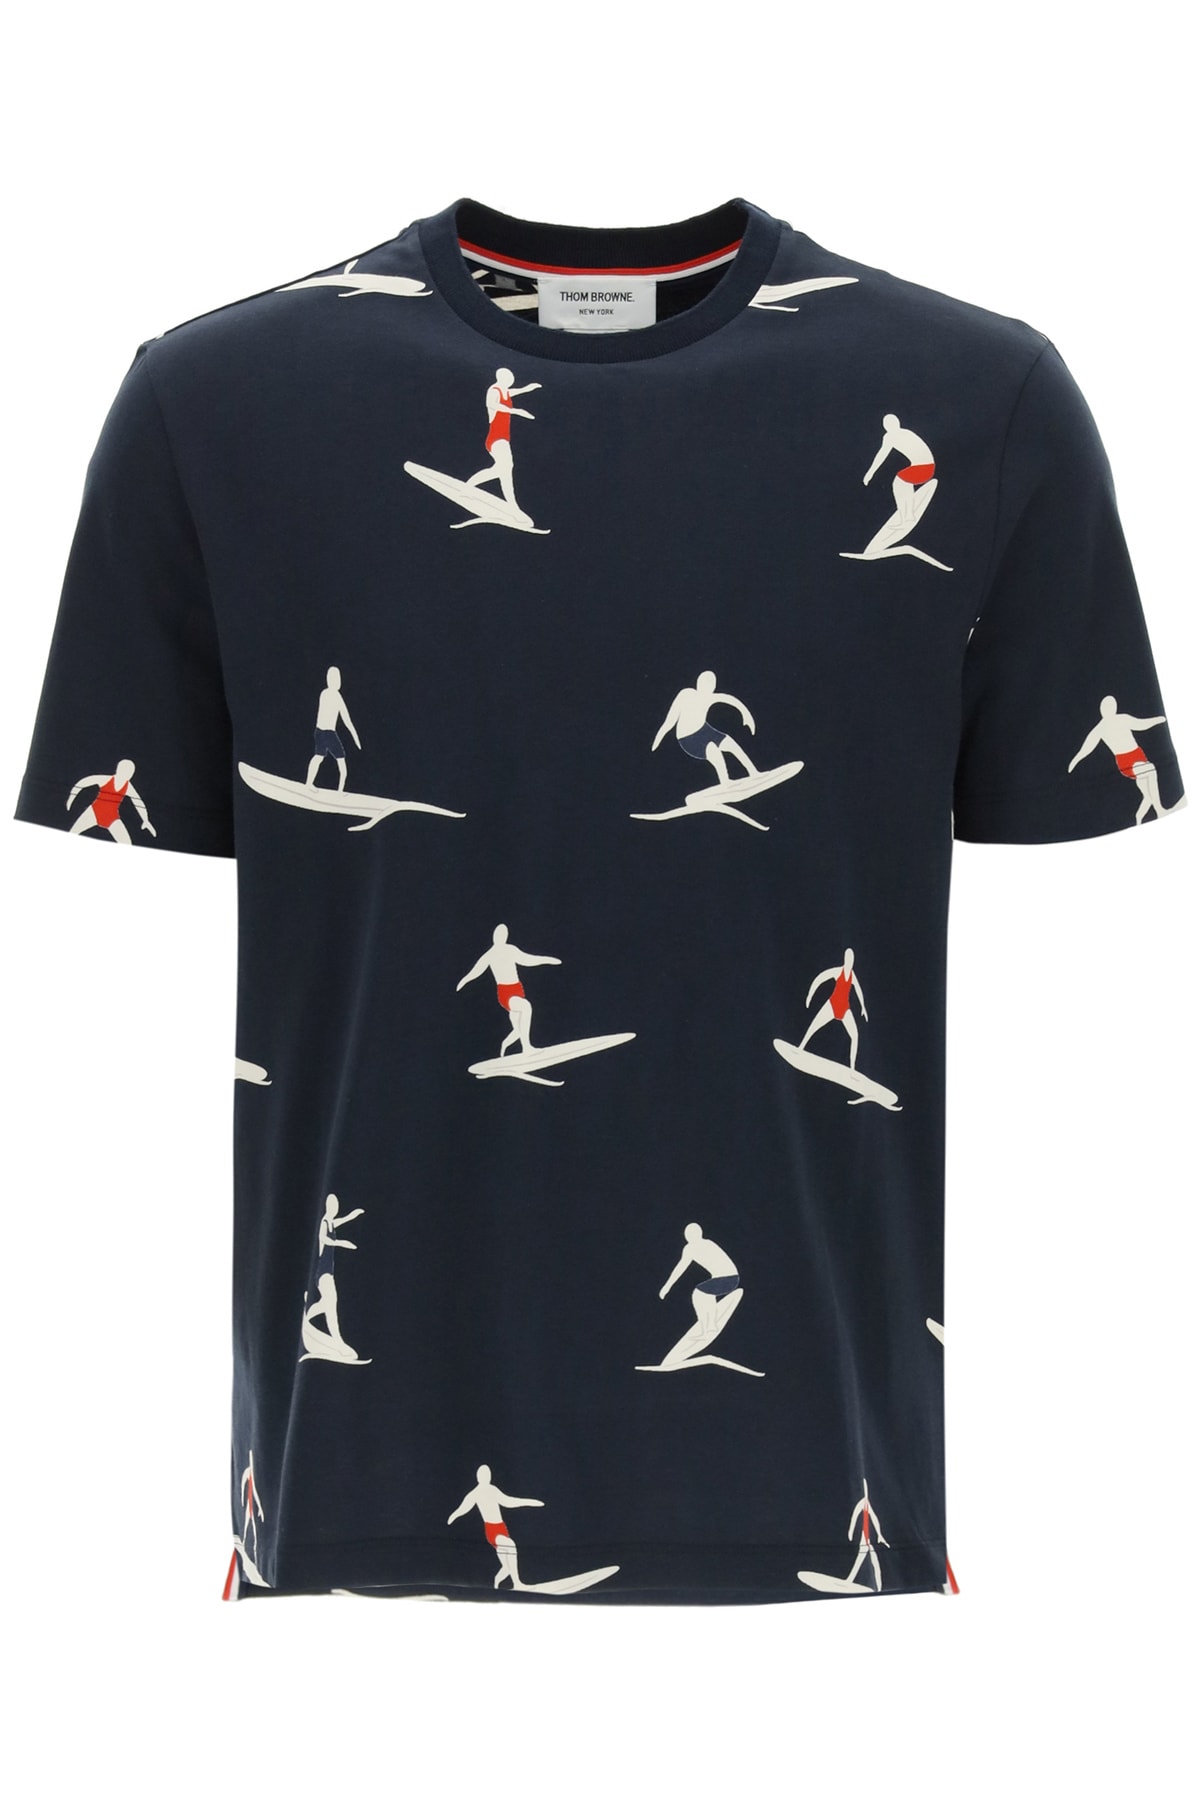 Thom Browne Surfer Print T-shirt